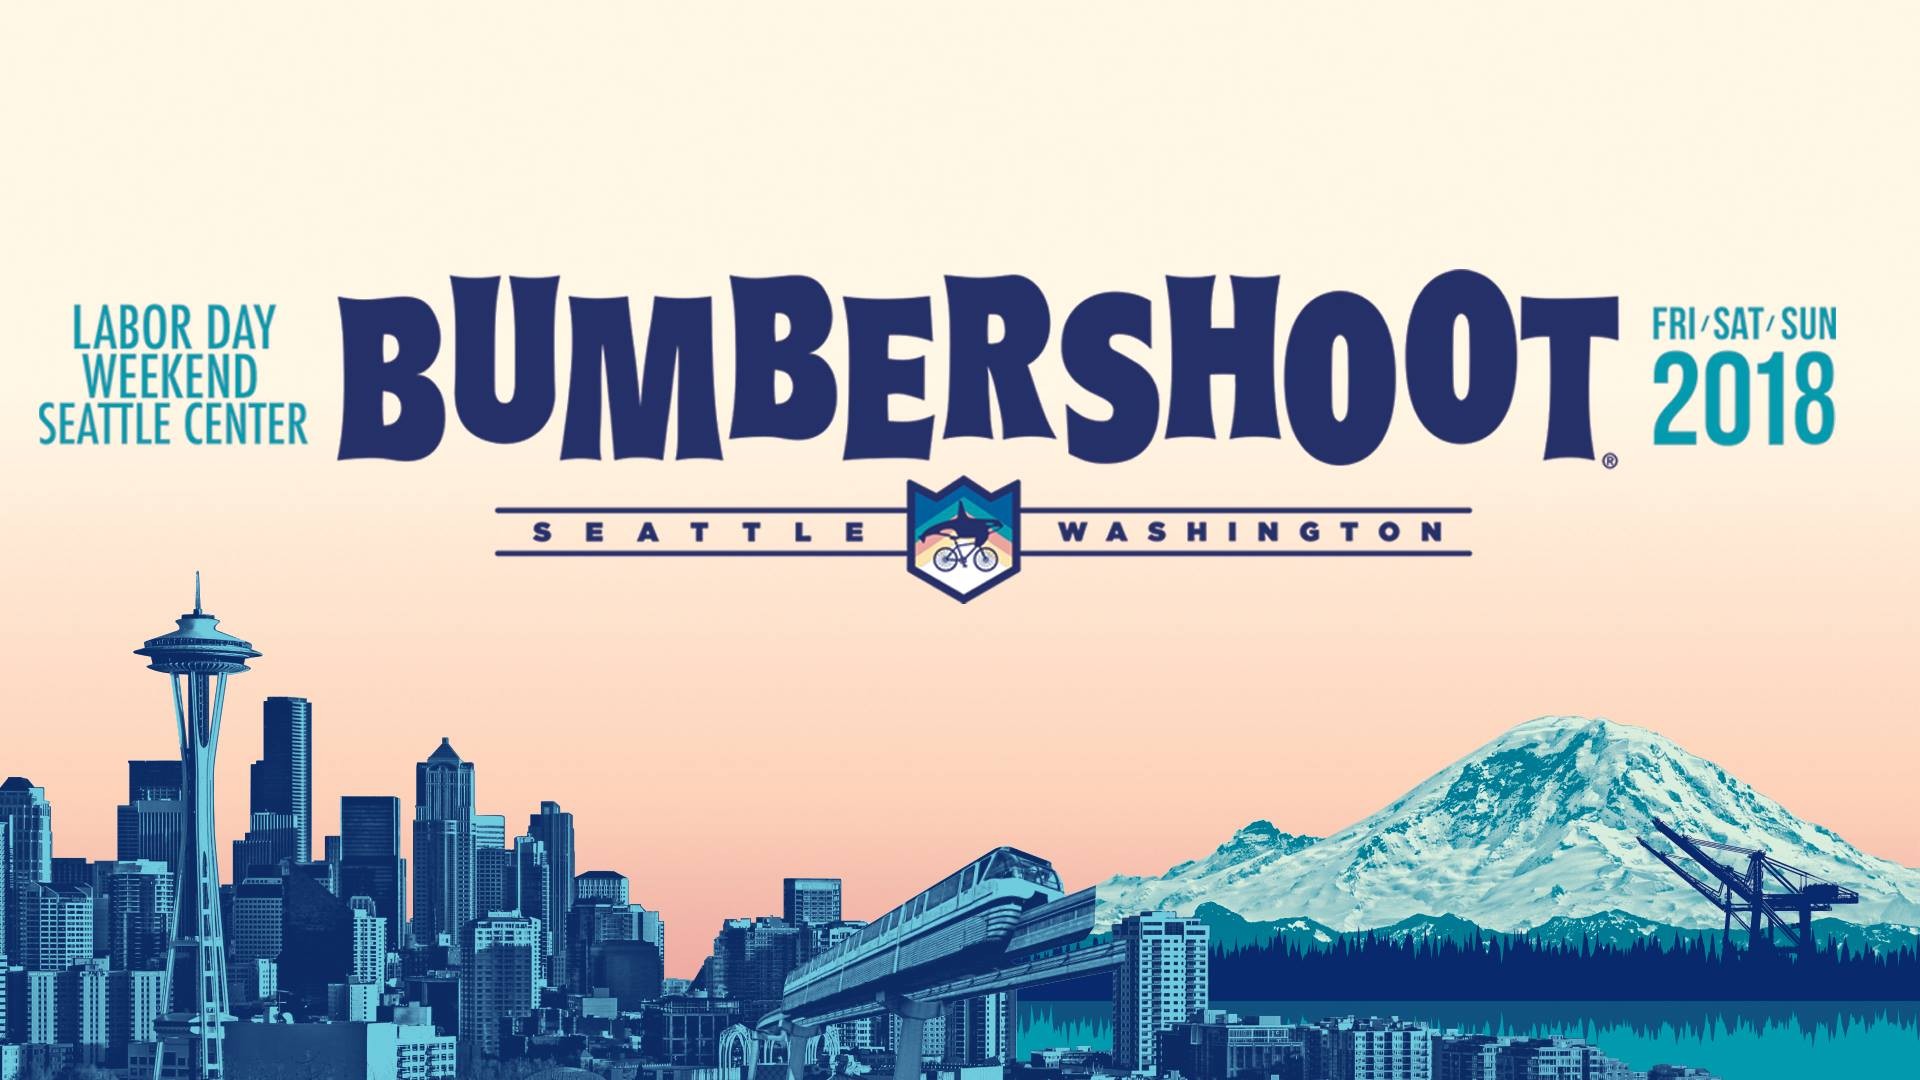 Bumbershoot 2018 at Seattle Center in Seattle, WA on Aug 31Sept 2